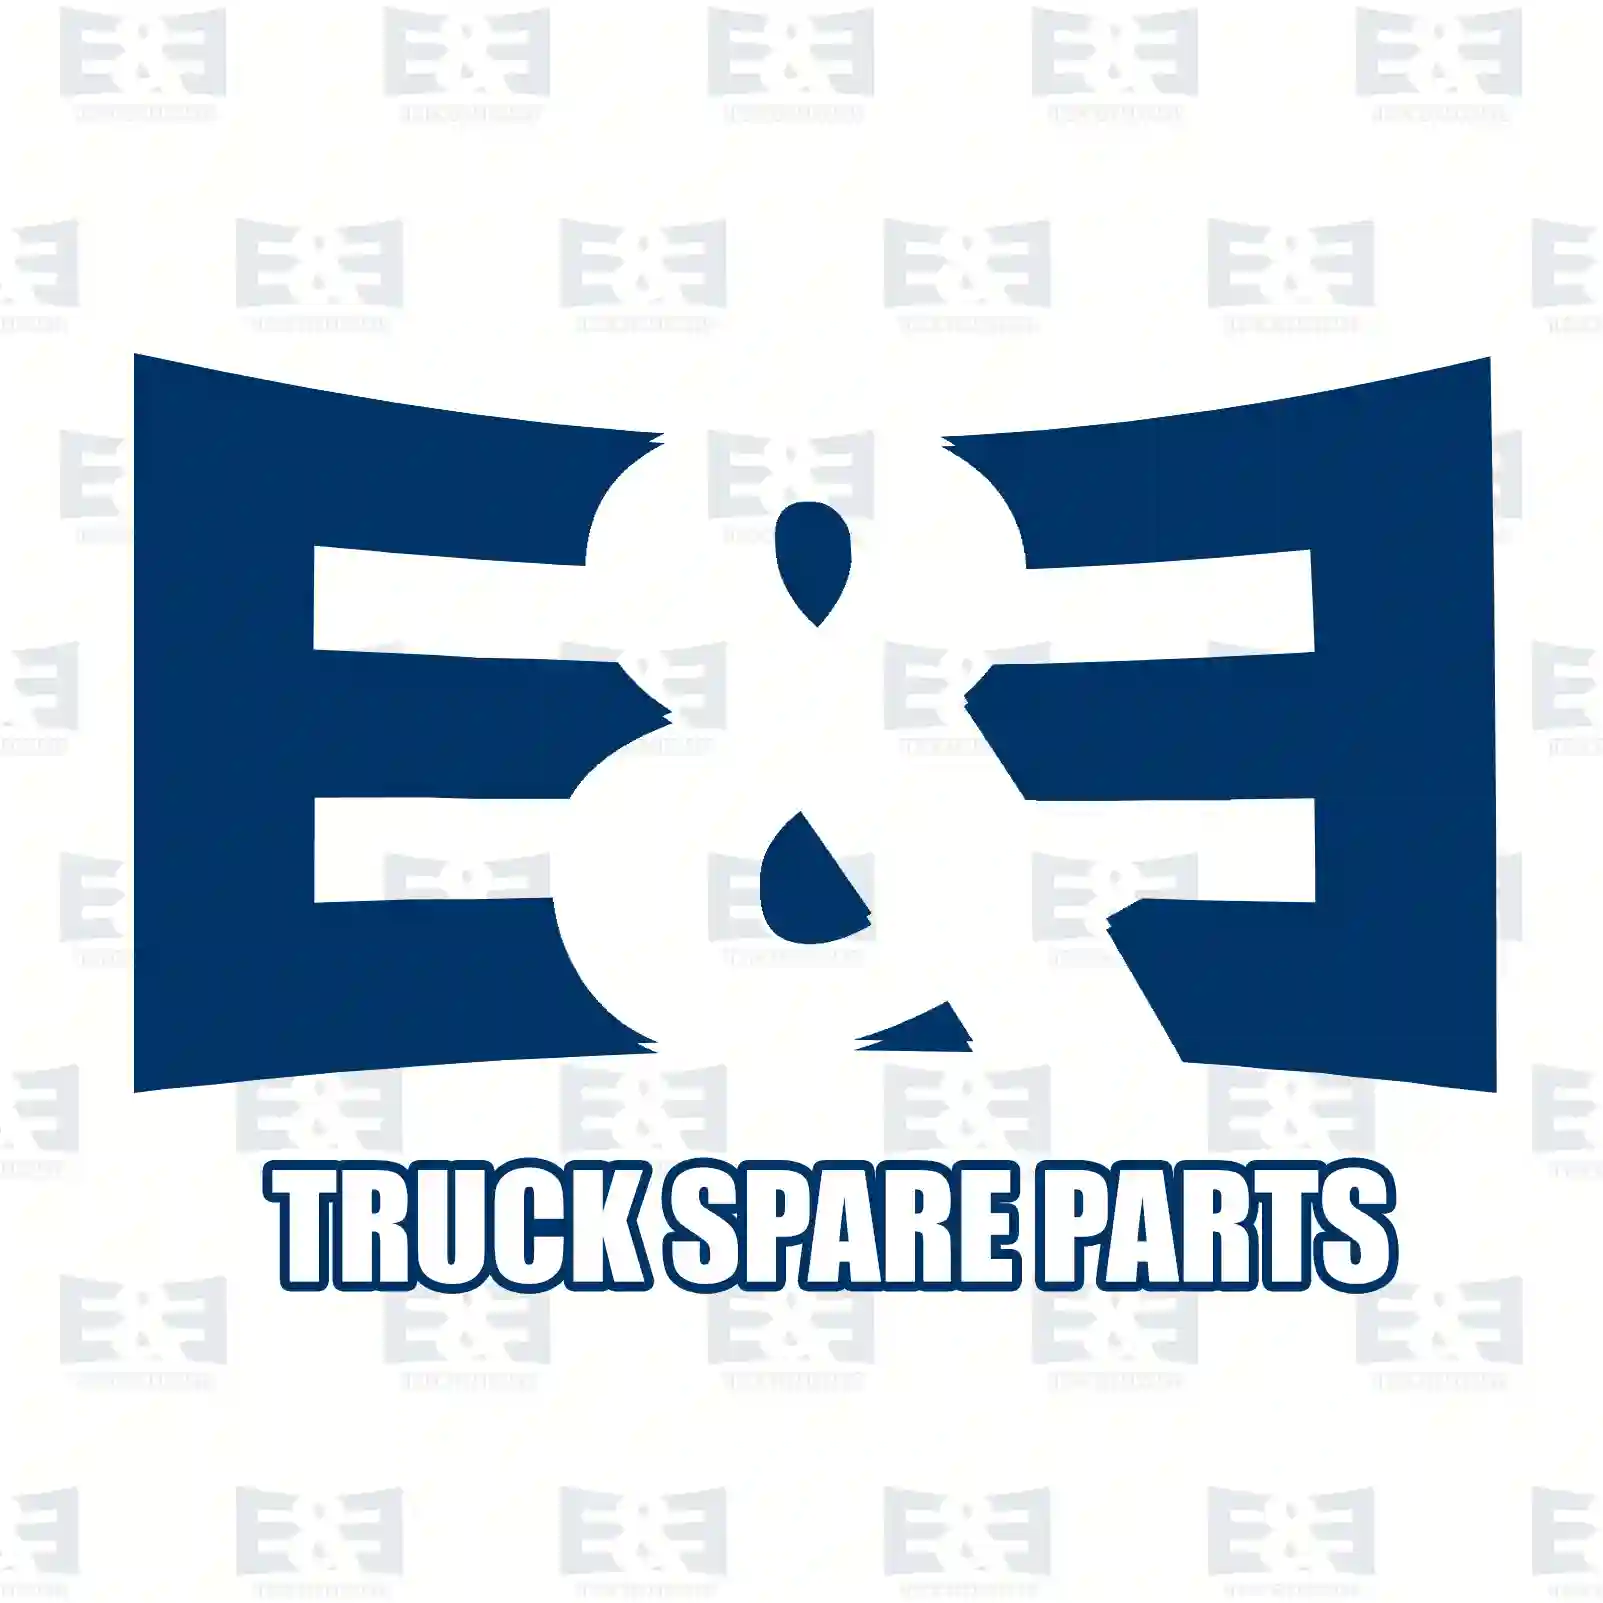 Position sensor, 2E2279214, 7420562642, 20562 ||  2E2279214 E&E Truck Spare Parts | Truck Spare Parts, Auotomotive Spare Parts Position sensor, 2E2279214, 7420562642, 20562 ||  2E2279214 E&E Truck Spare Parts | Truck Spare Parts, Auotomotive Spare Parts